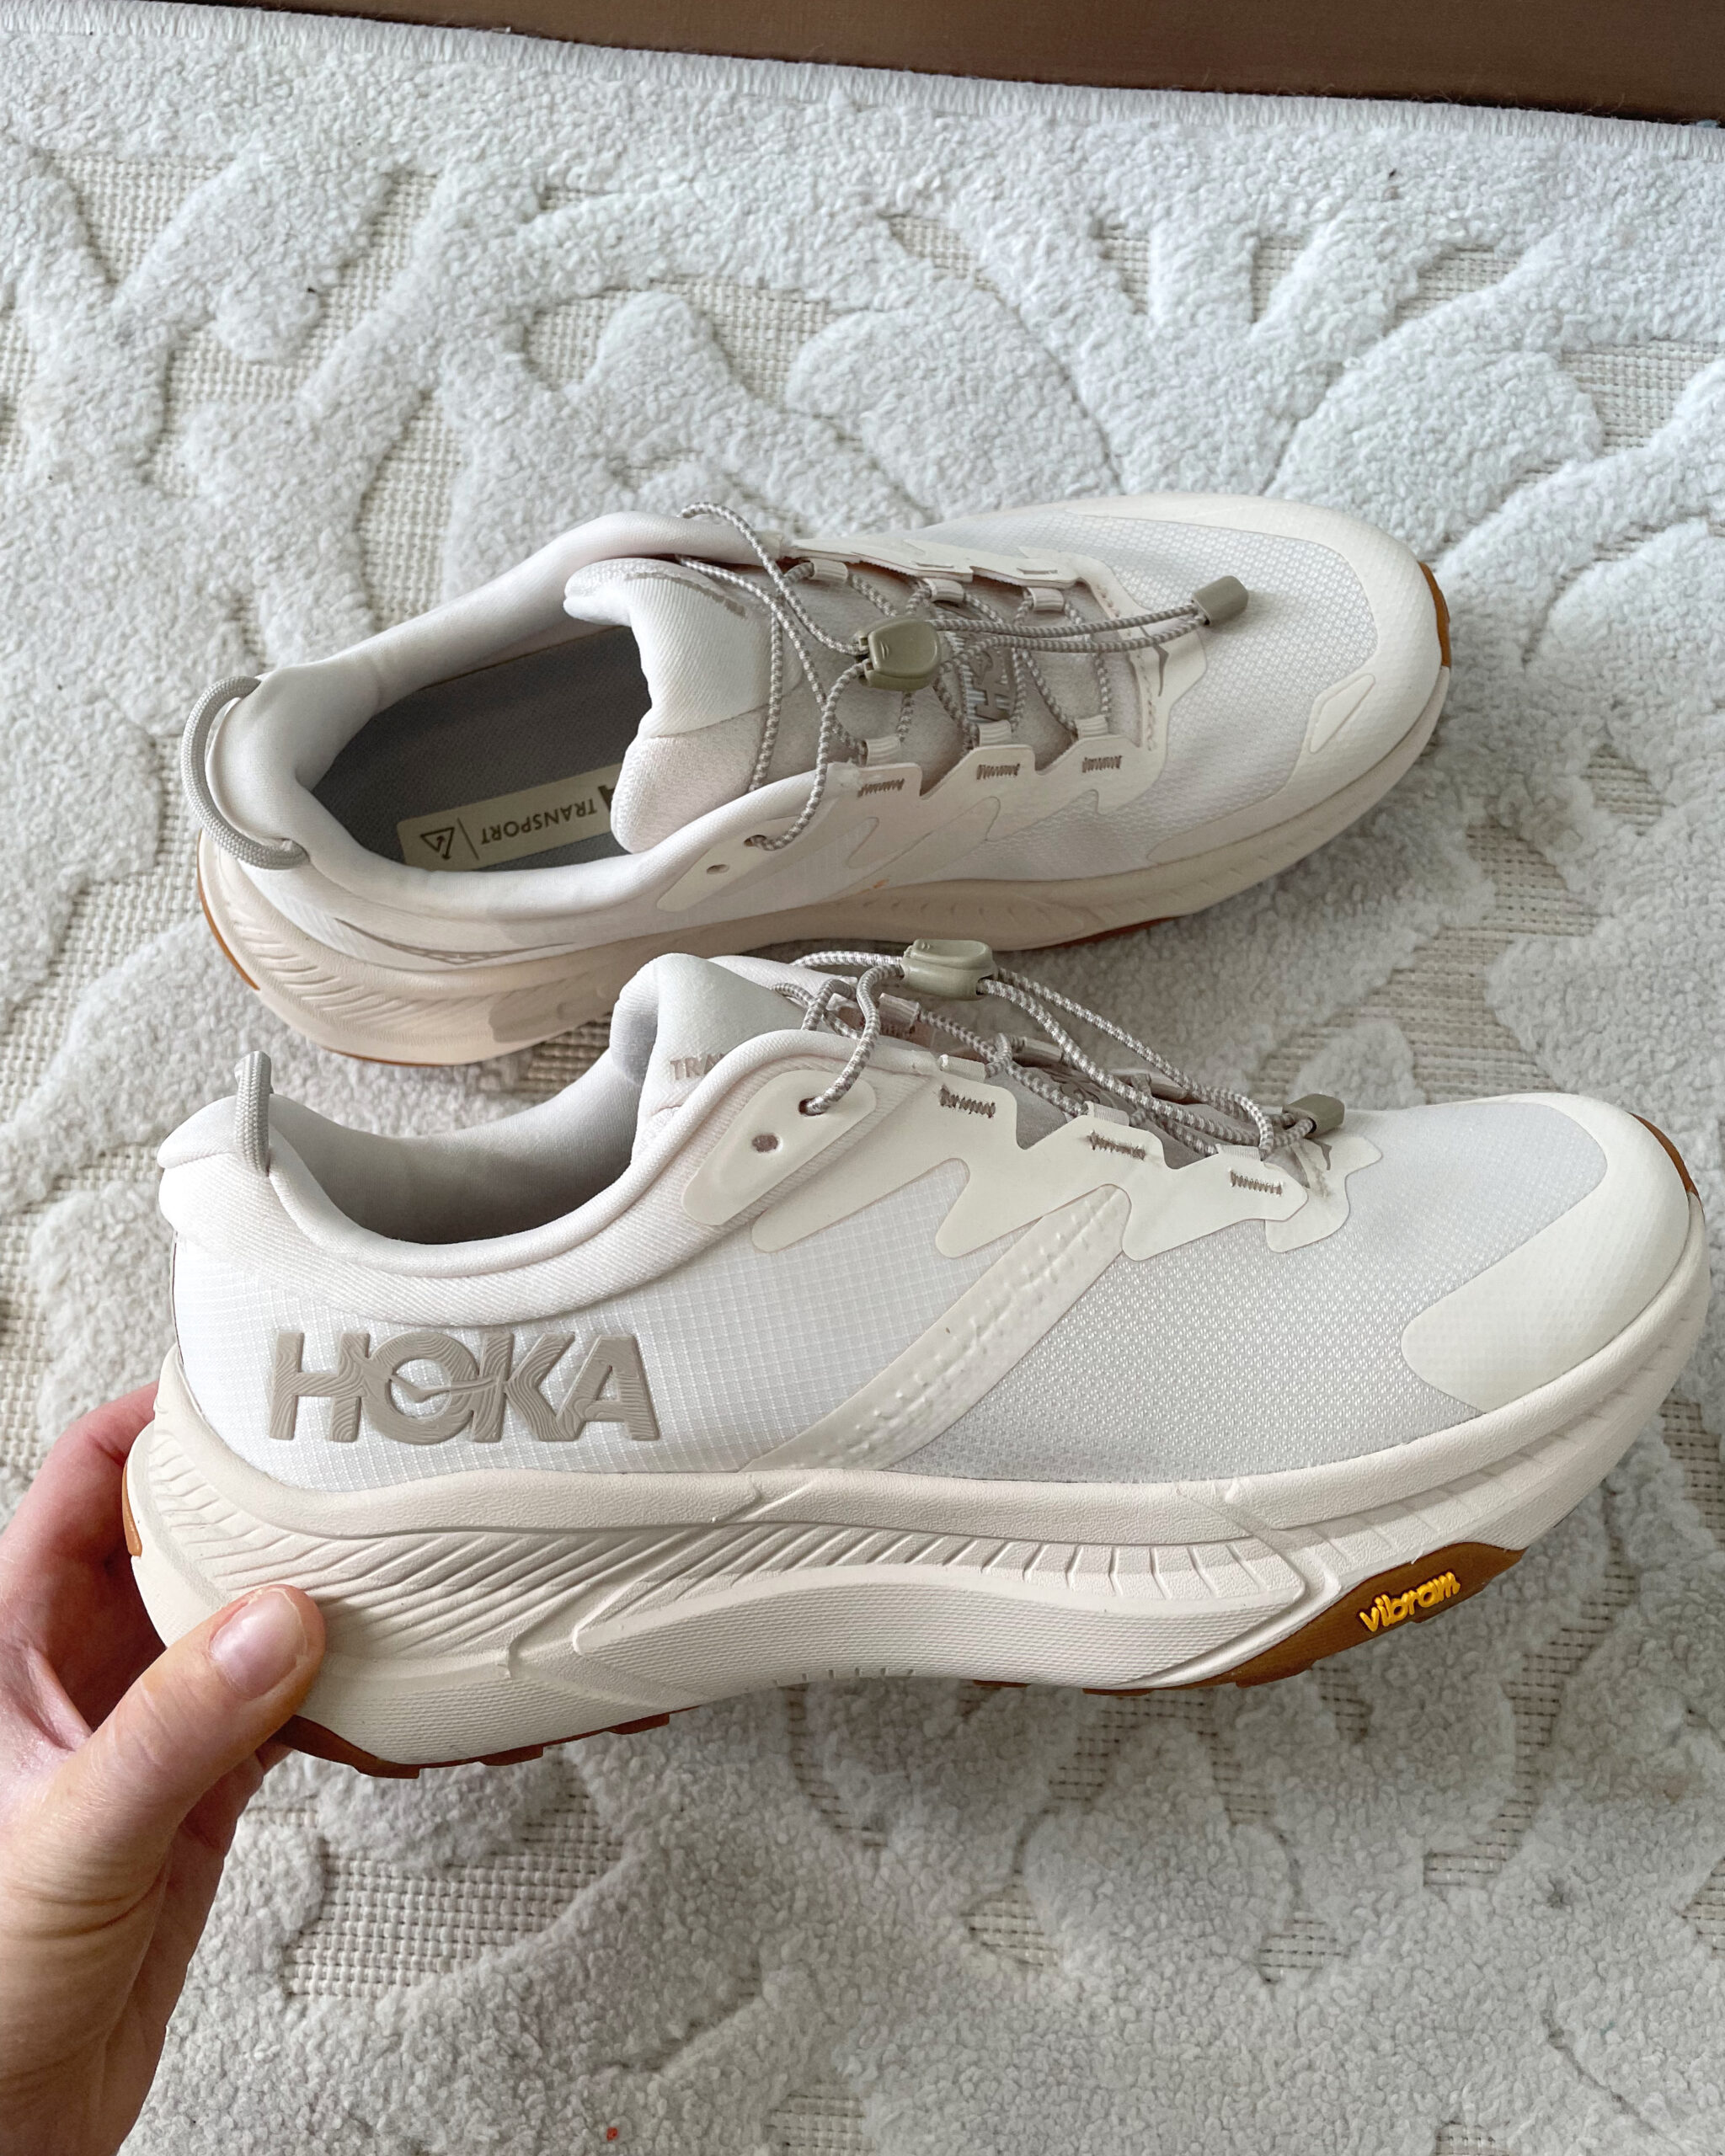 HOKA Women's Transport Shoes